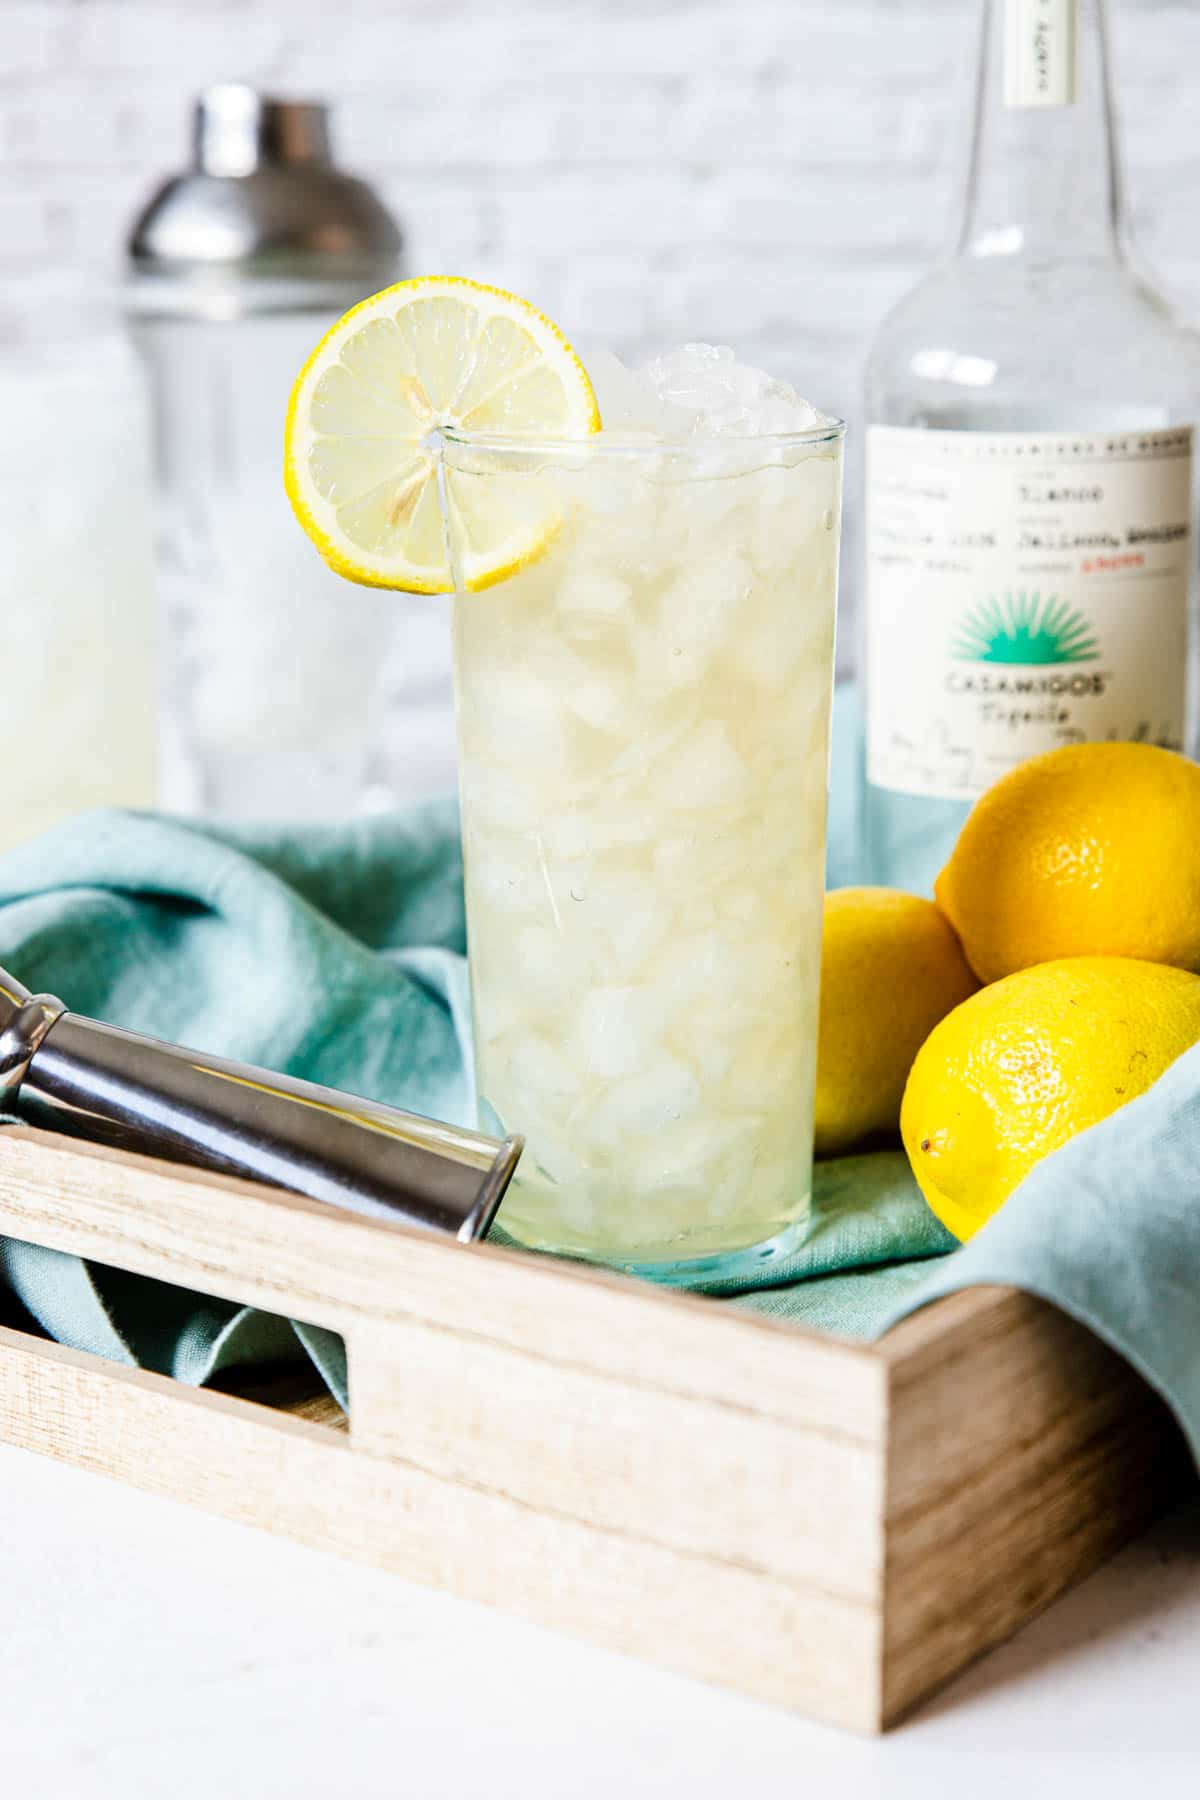 Tequila lemonade in a glass with a lemon wheel